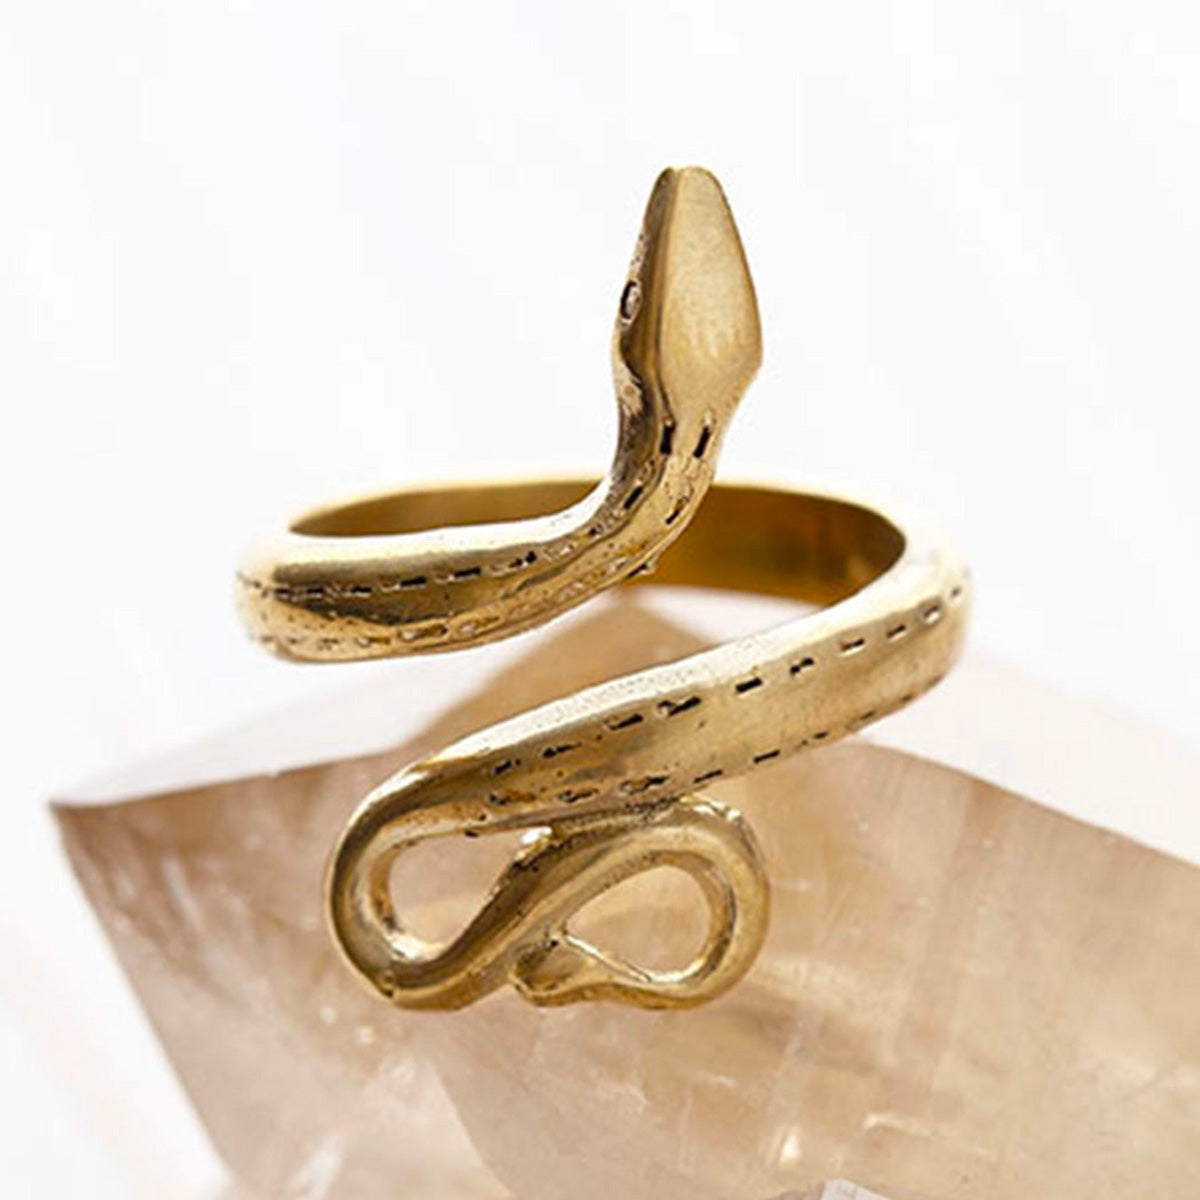 Adjustable Golden Serpent Ring